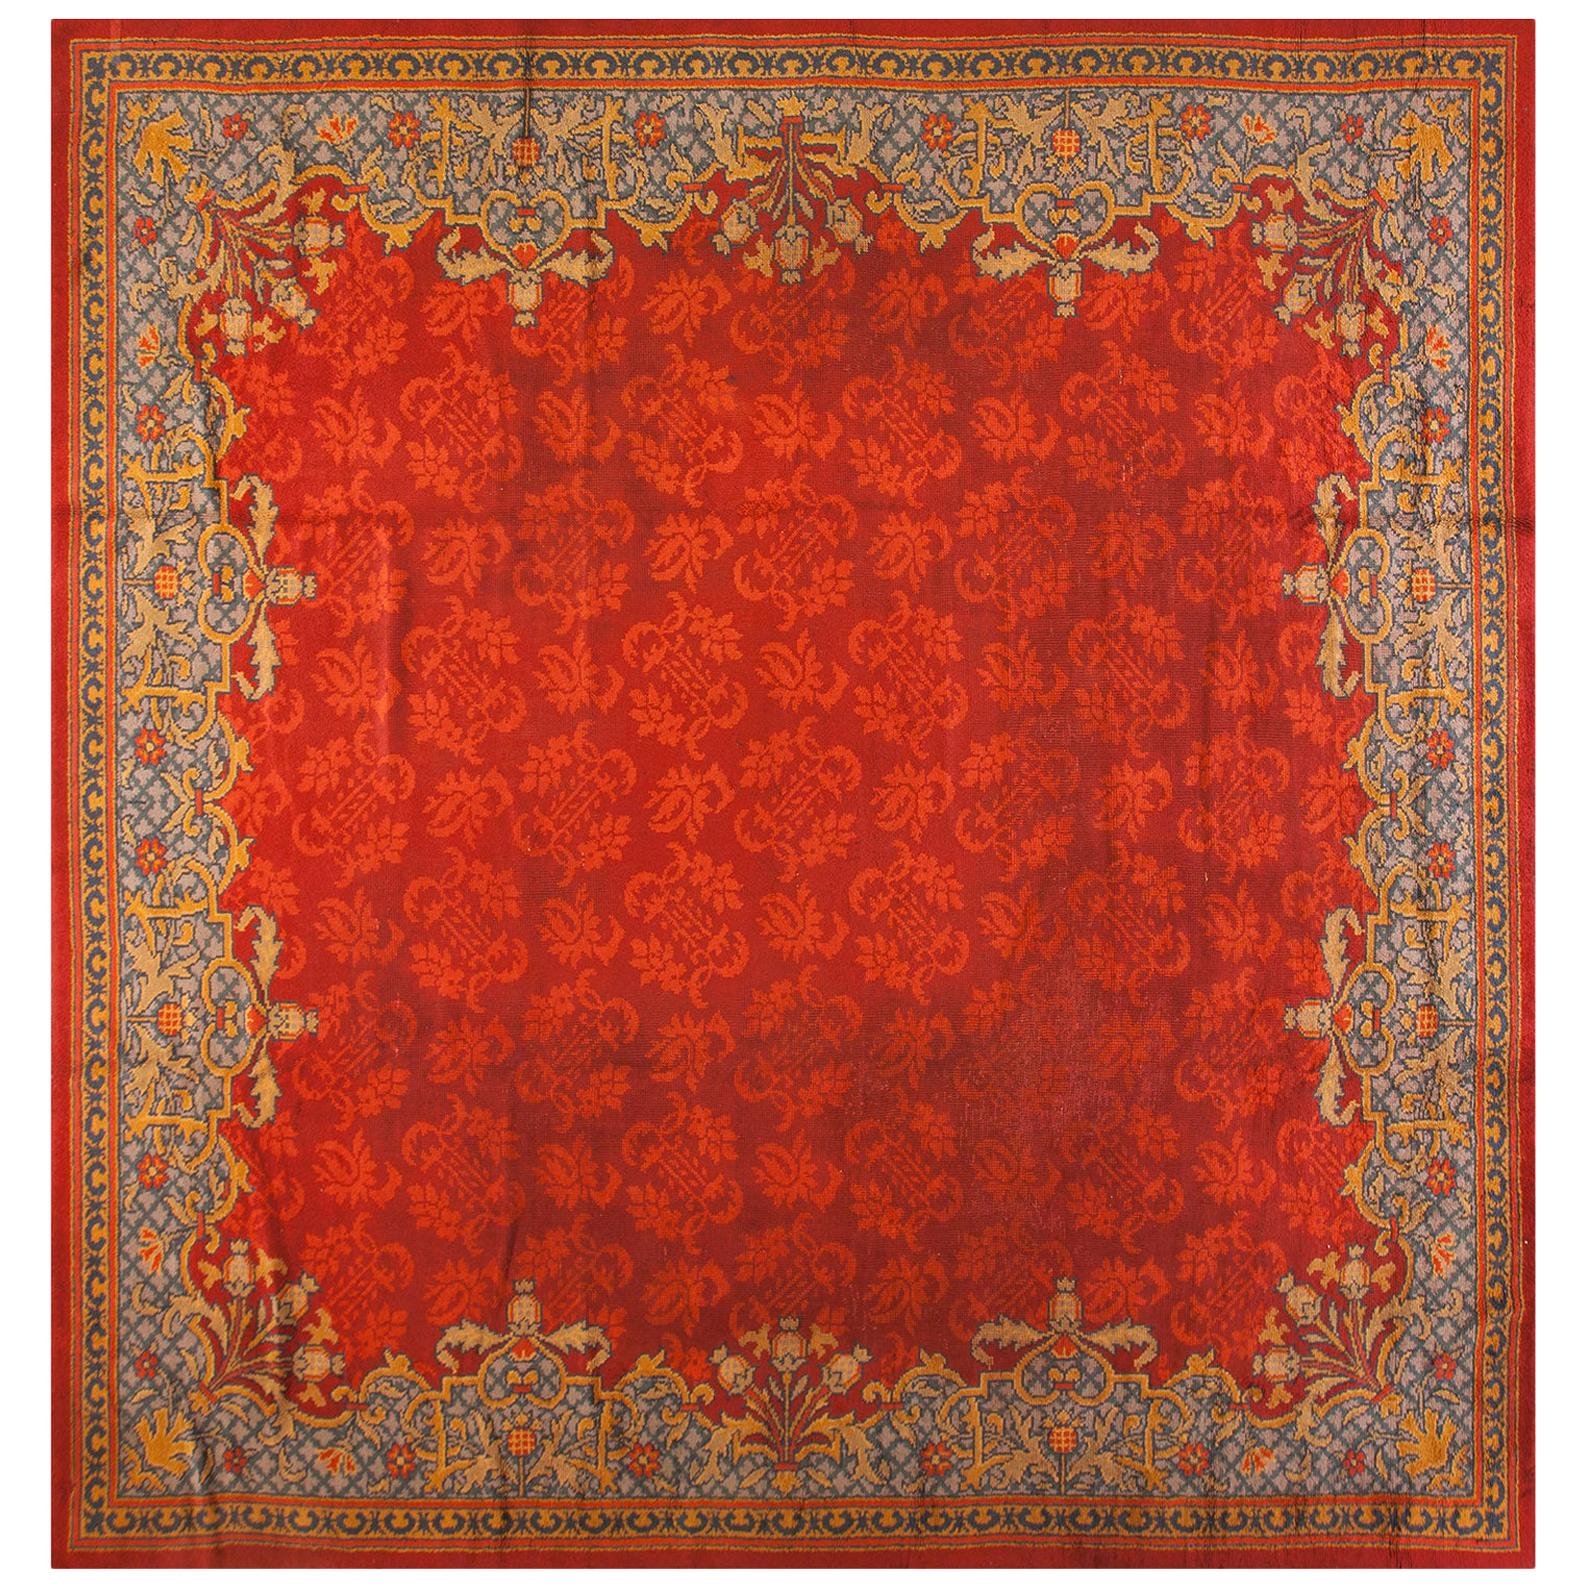 Early 20th Century English Edwardian Axminster Carpet (13'8" x 14' - 417 x 427)